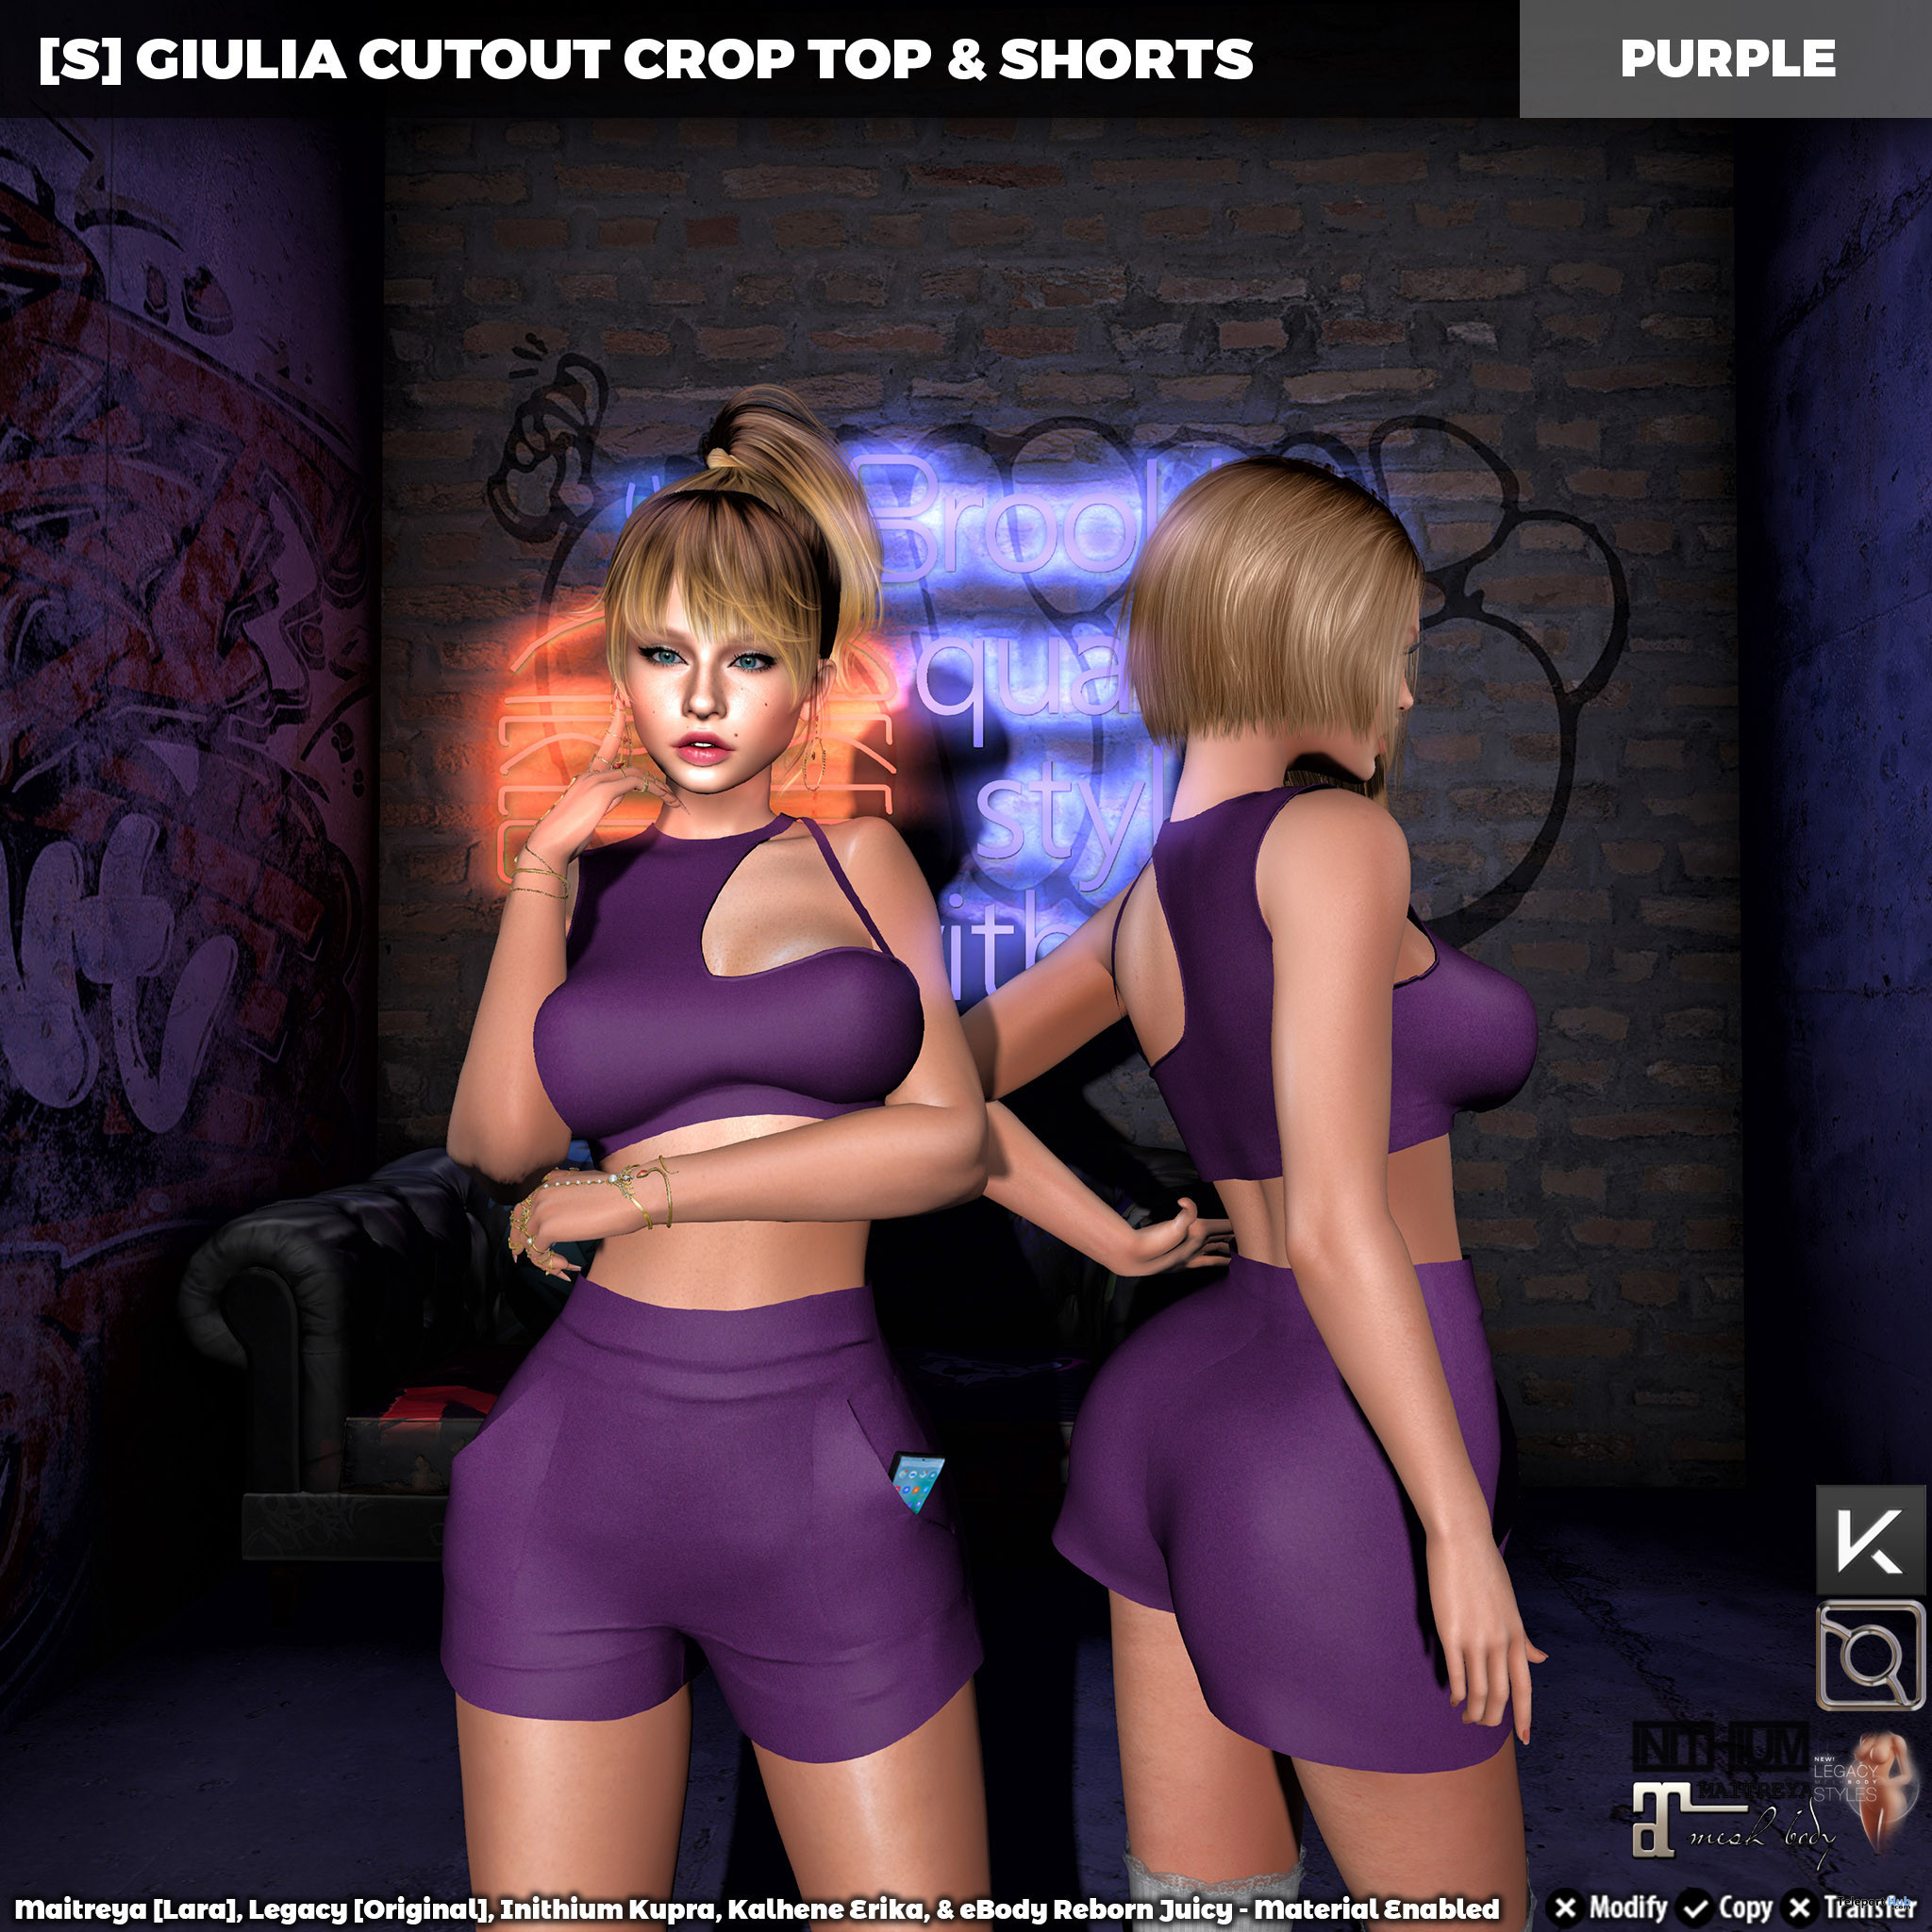 New Release: [S] Giulia Cutout Crop Top & Shorts by [satus Inc] - Teleport Hub - teleporthub.com